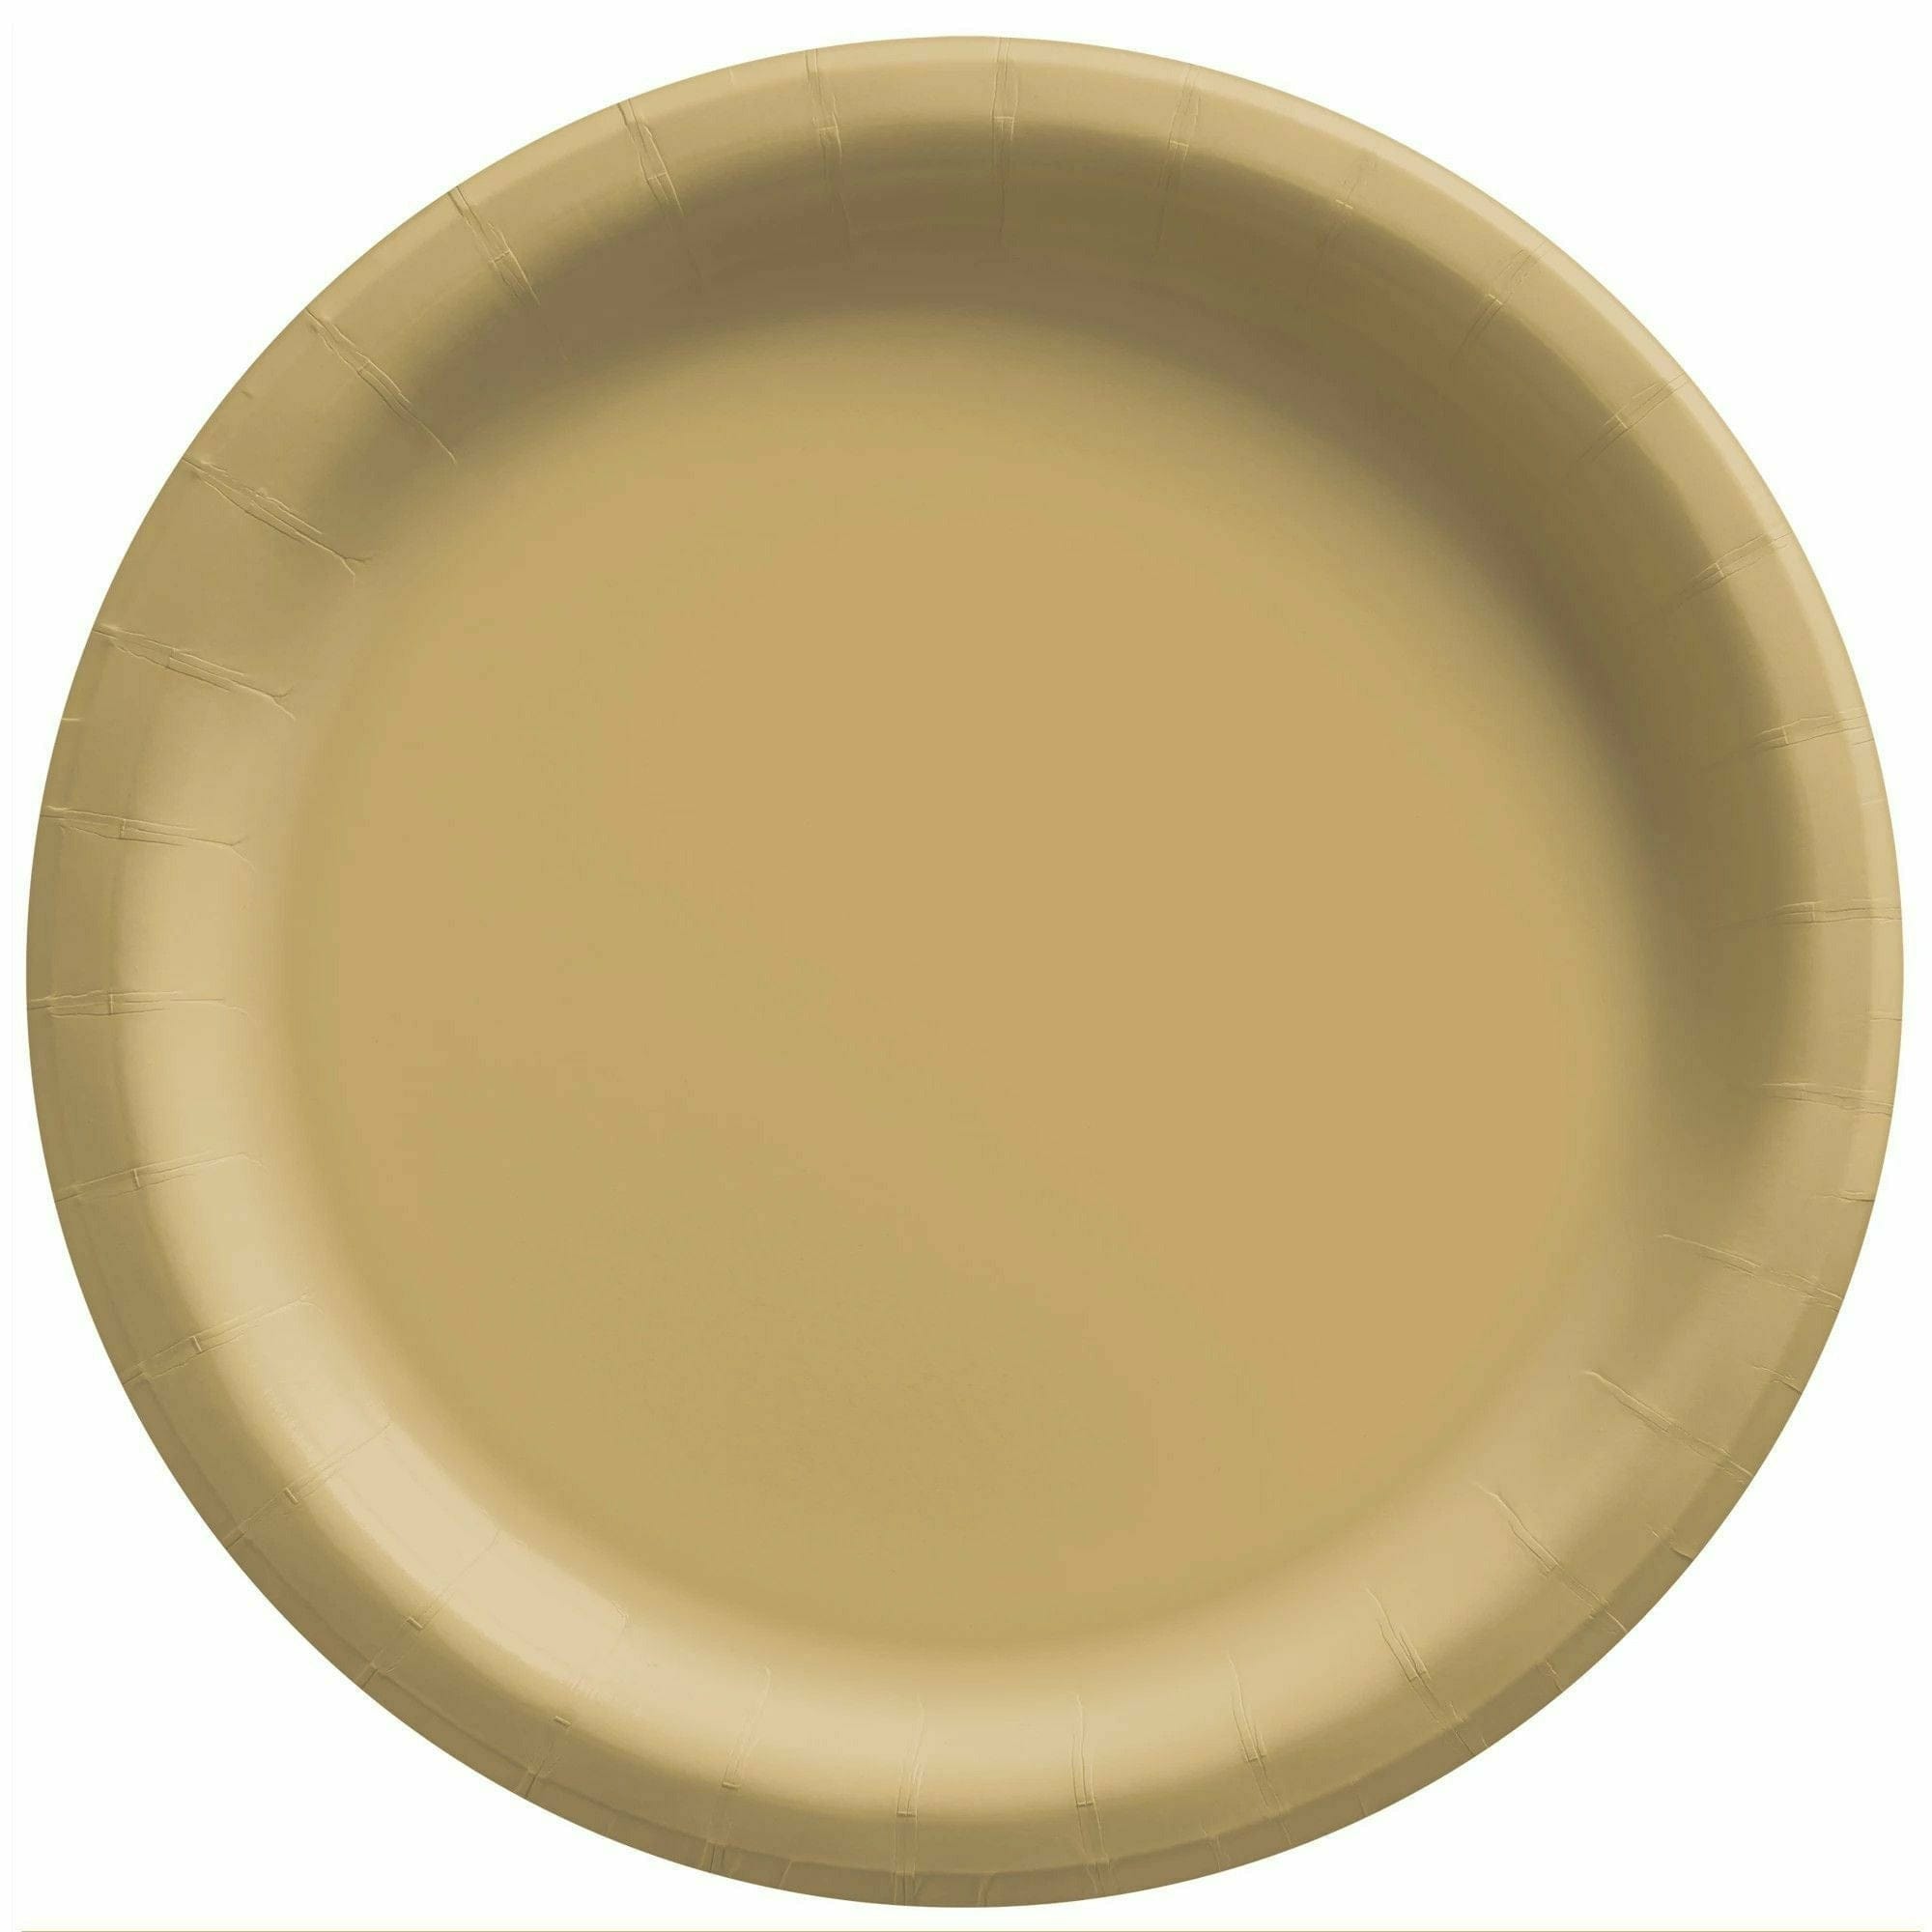 Amscan BASIC Gold - 10" Round Paper Plates, 50 Ct.